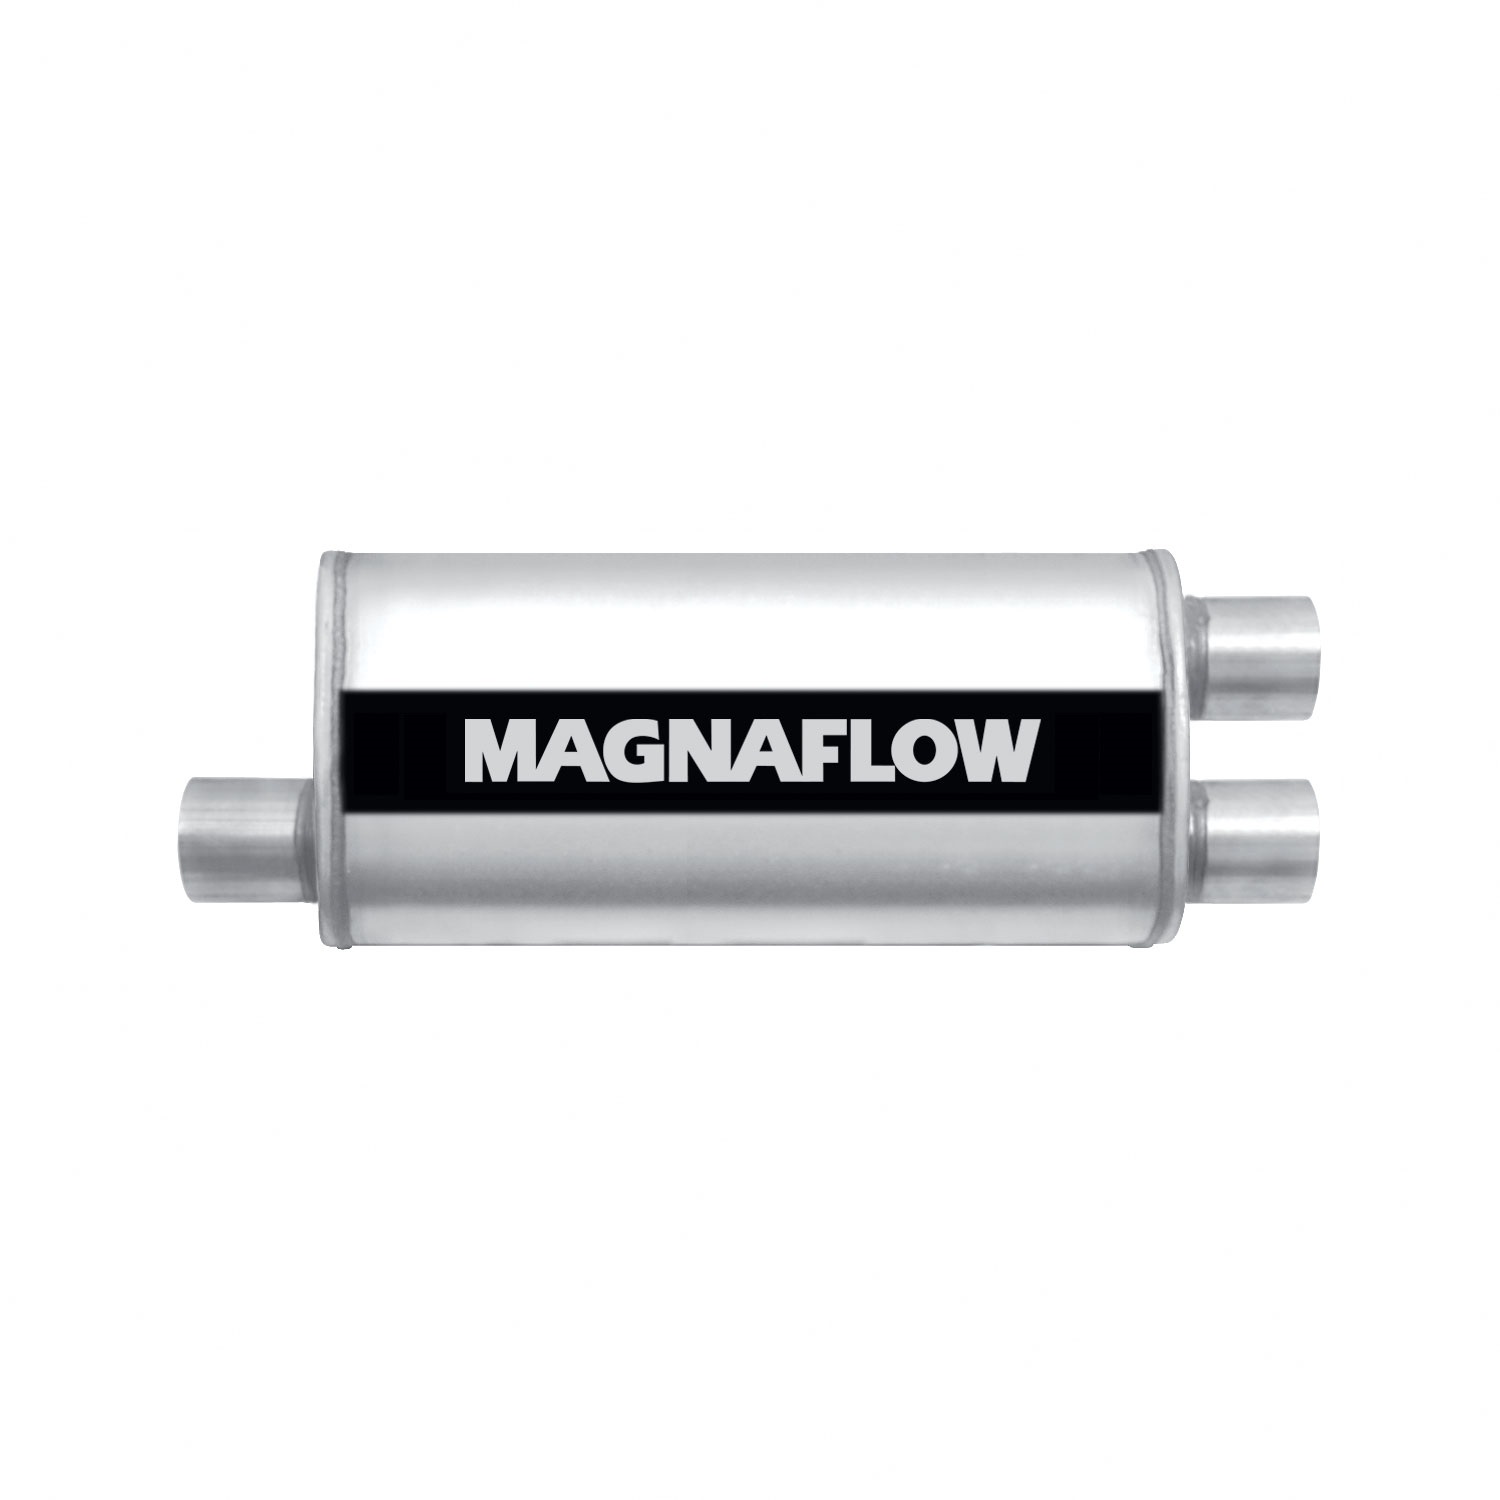 Magnaflow Performance Exhaust Magnaflow Performance Exhaust 12265 Stainless Steel Muffler